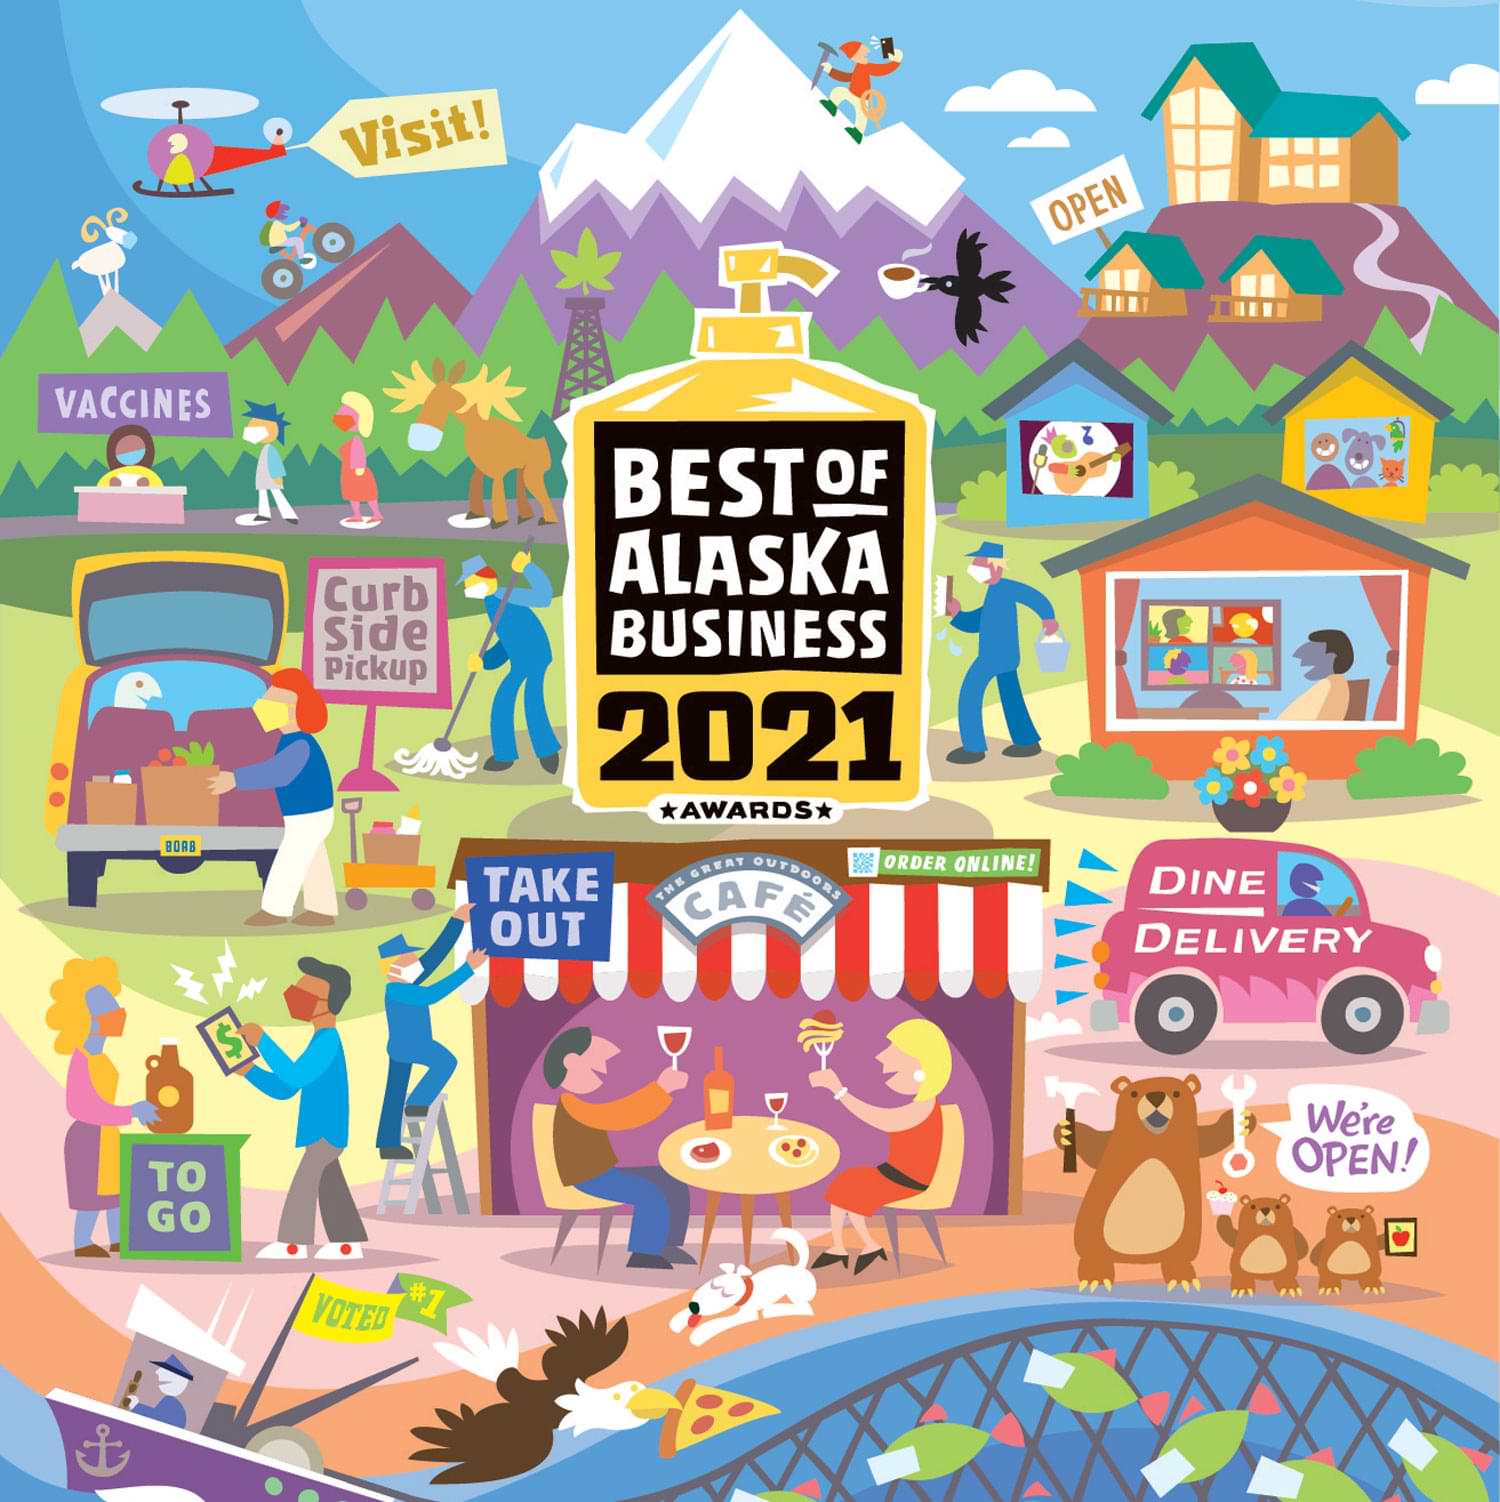 Best of Alaska Business 2021 Awards illustration